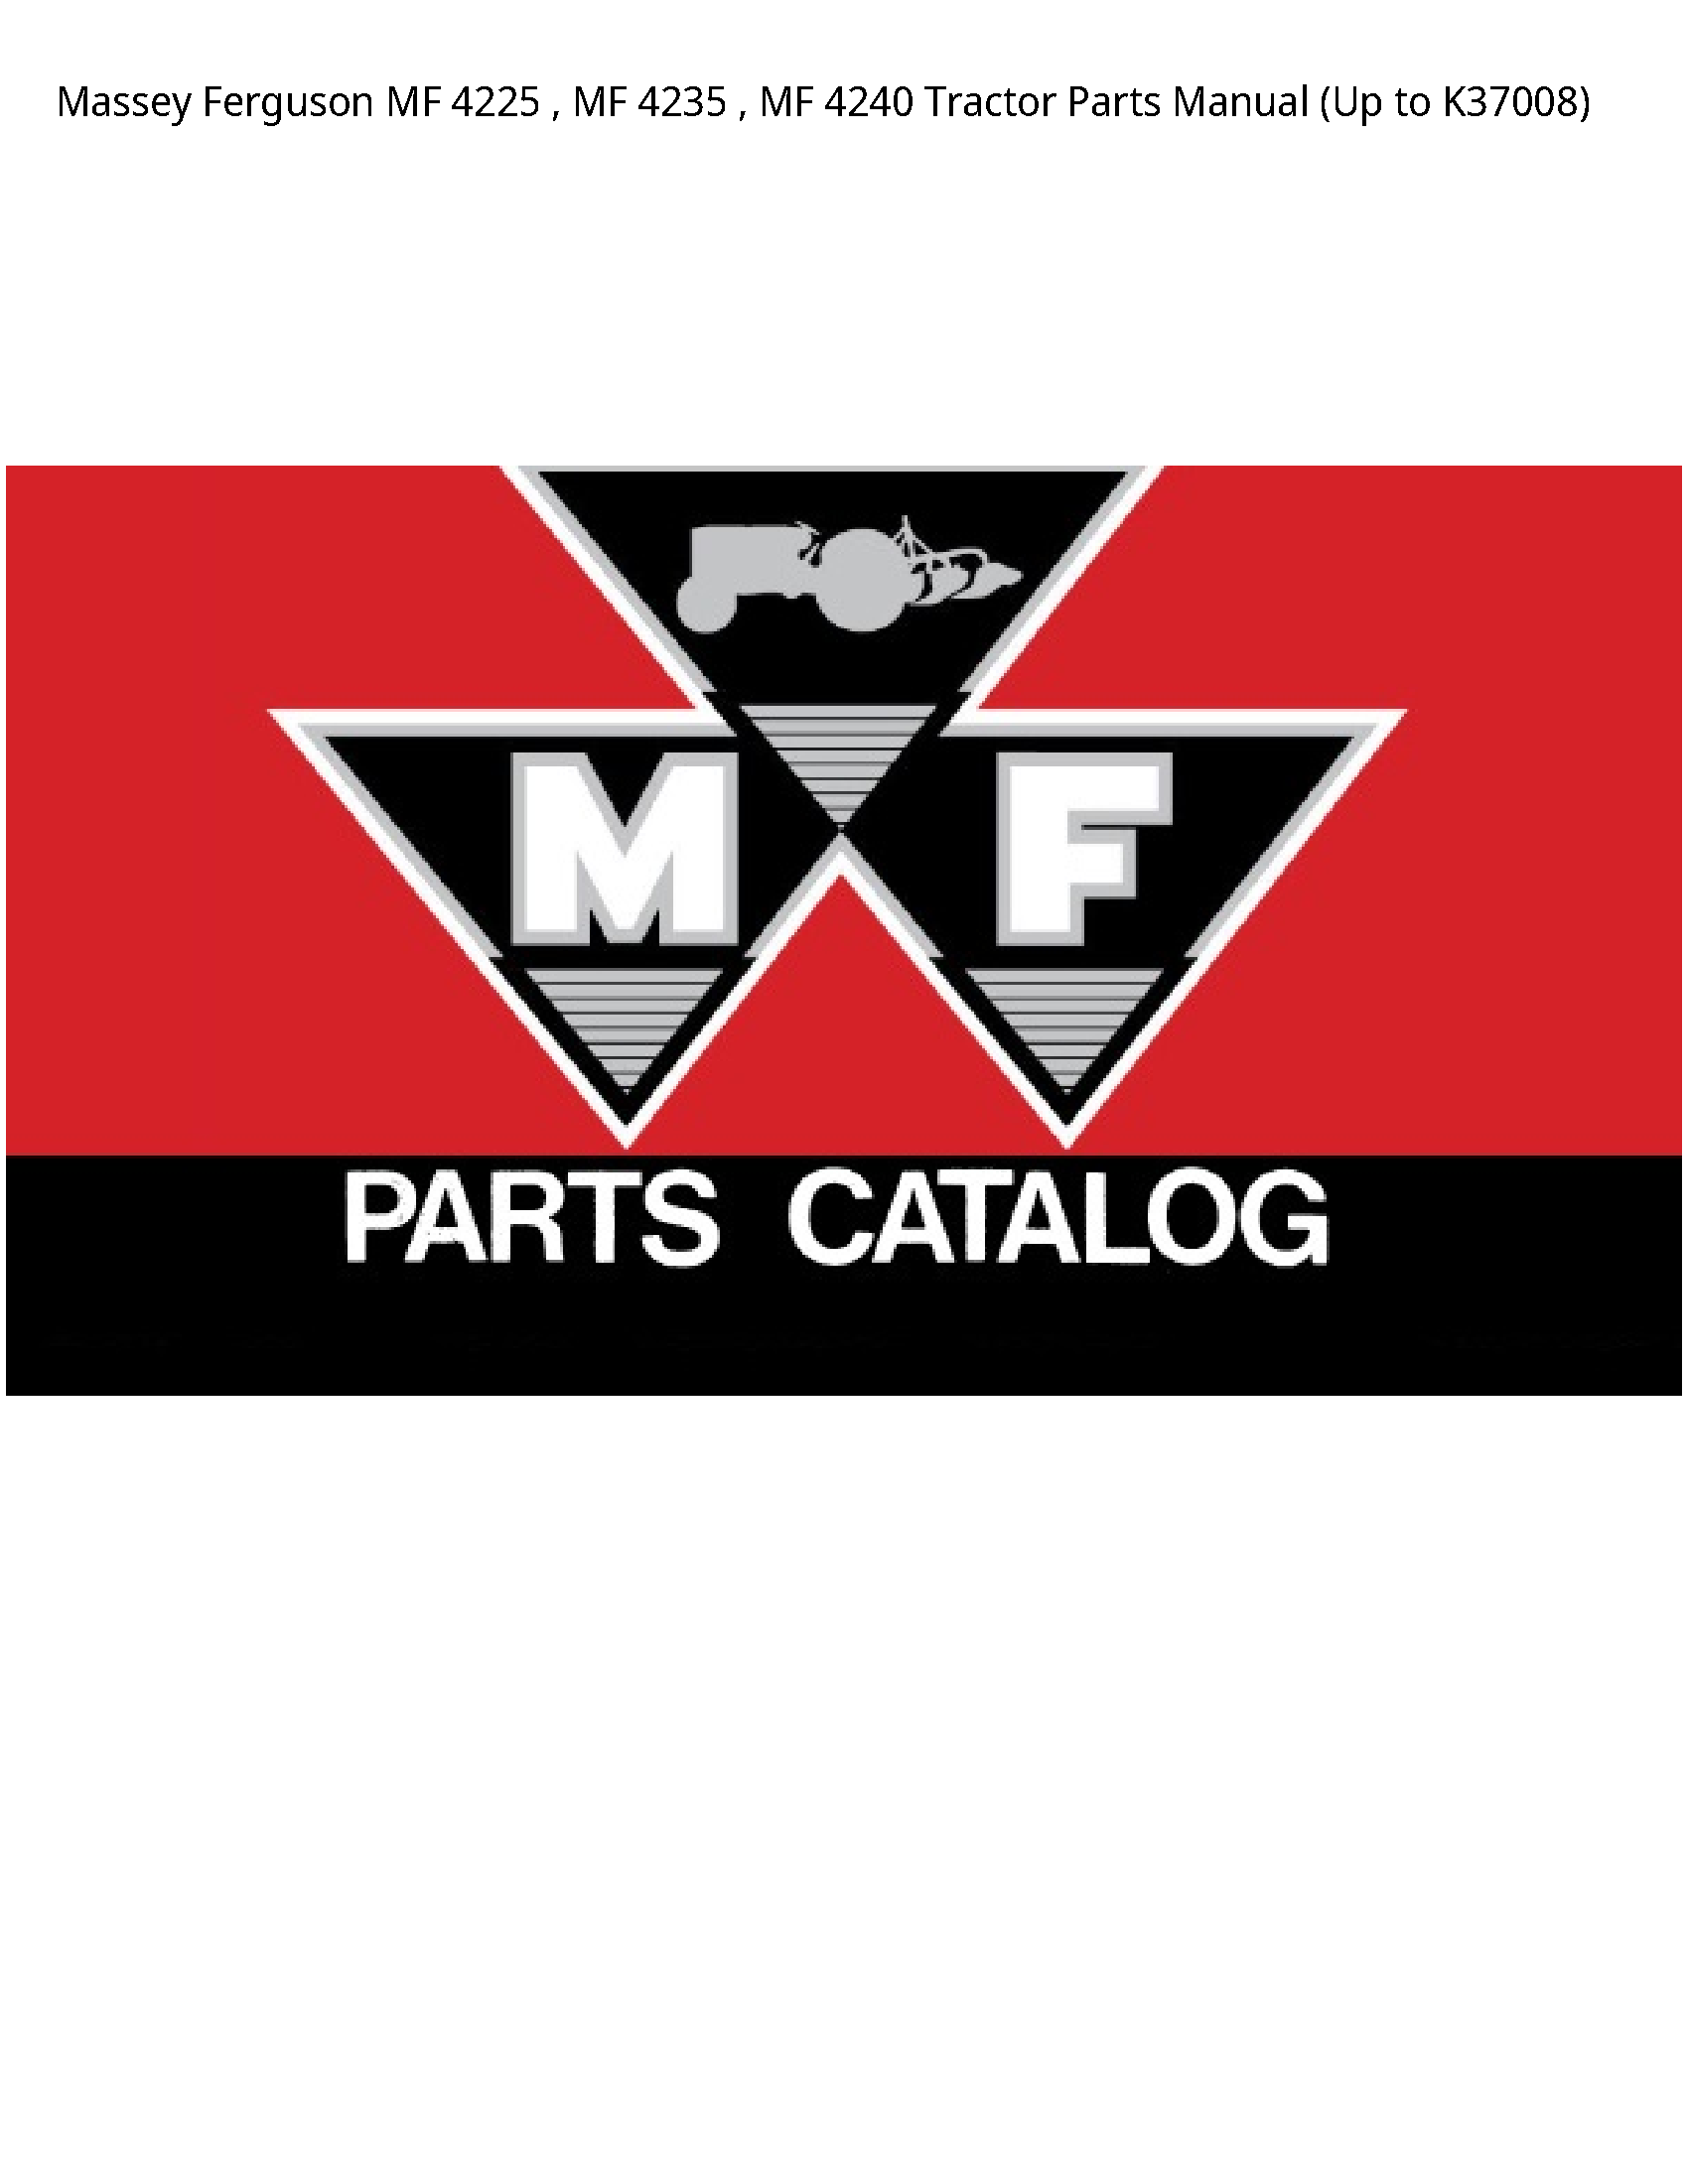 Massey Ferguson 4225 MF MF MF Tractor Parts manual